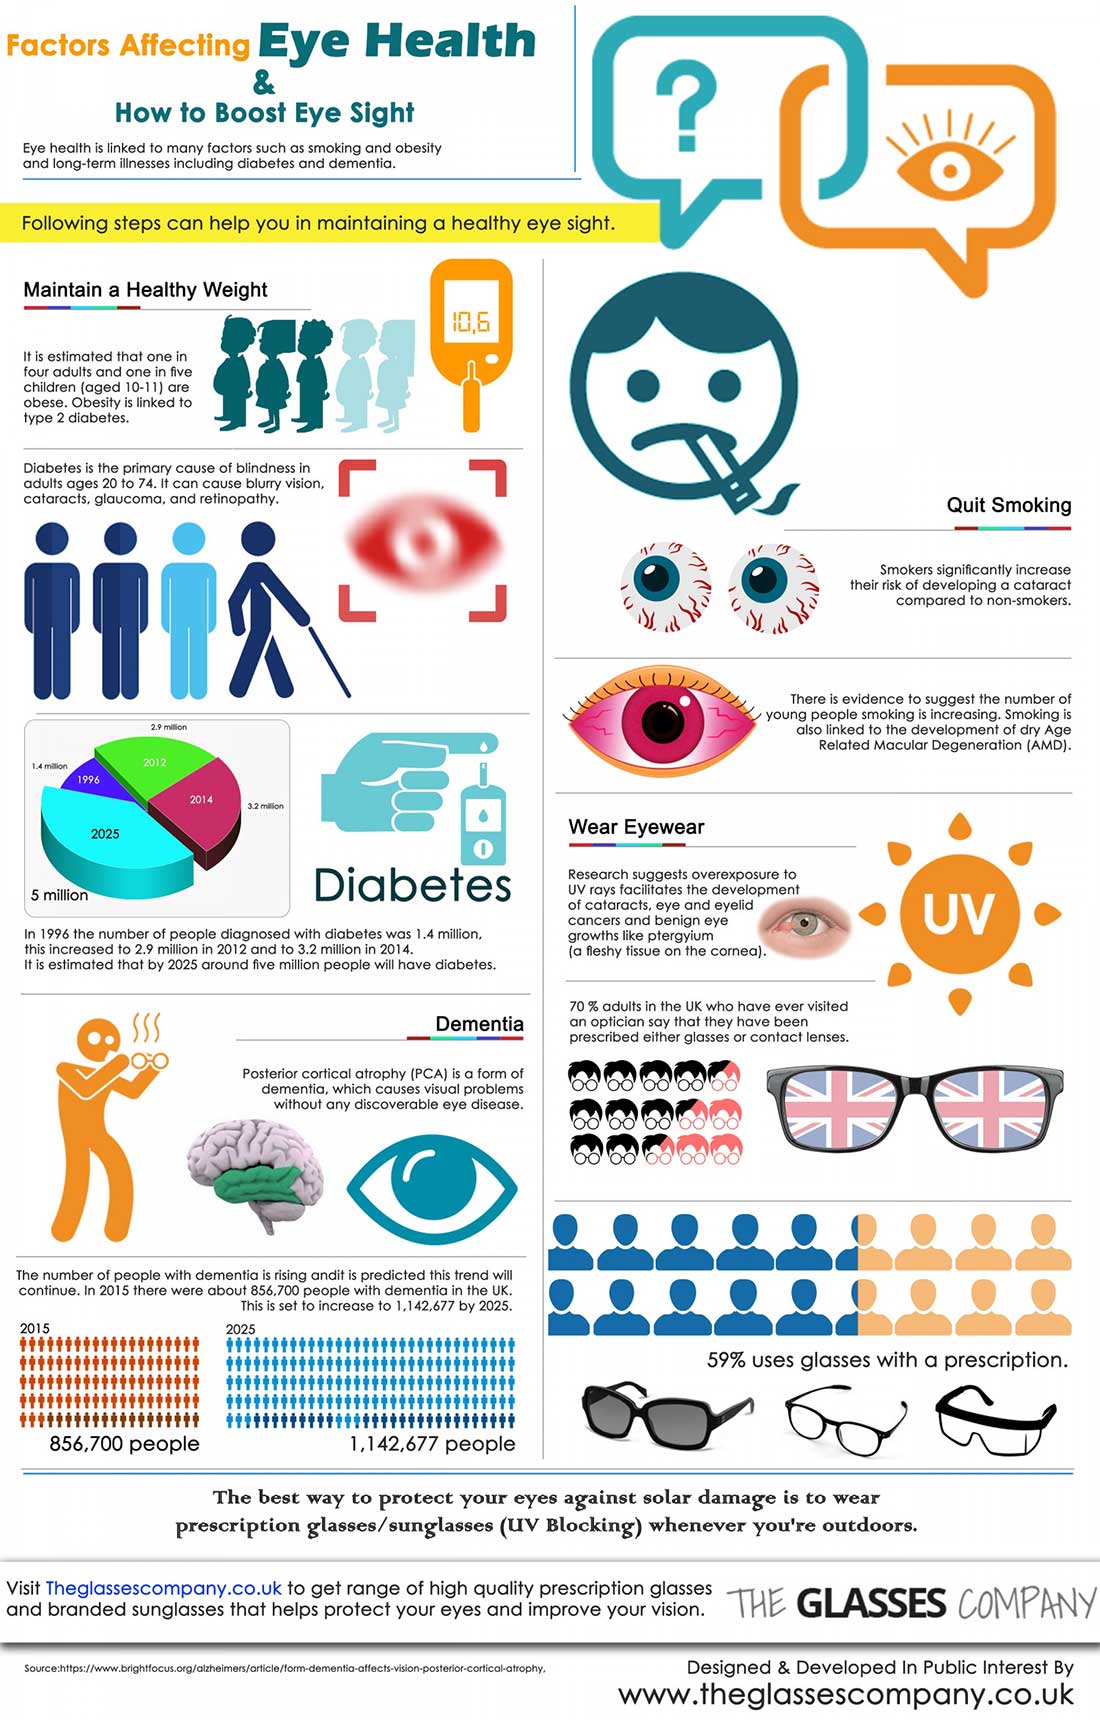 Glasses Company Infographic